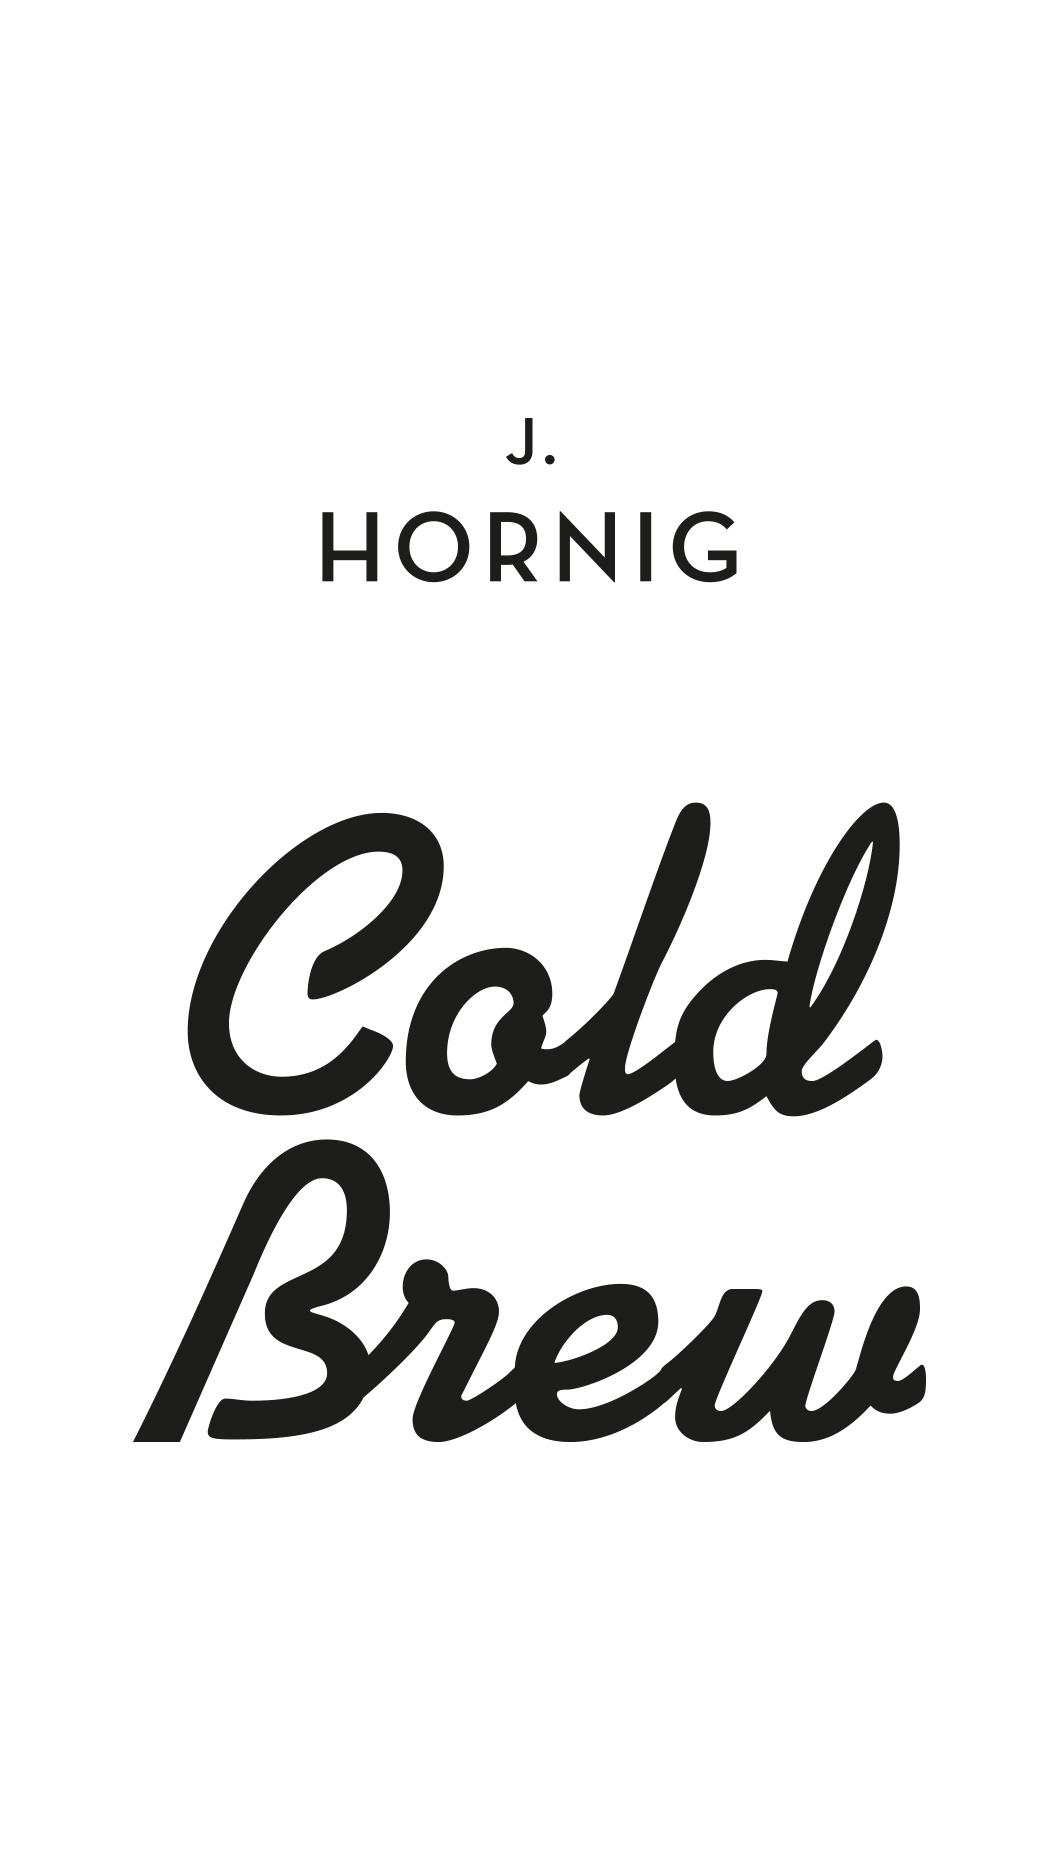 J. HORNIG COLD BREW